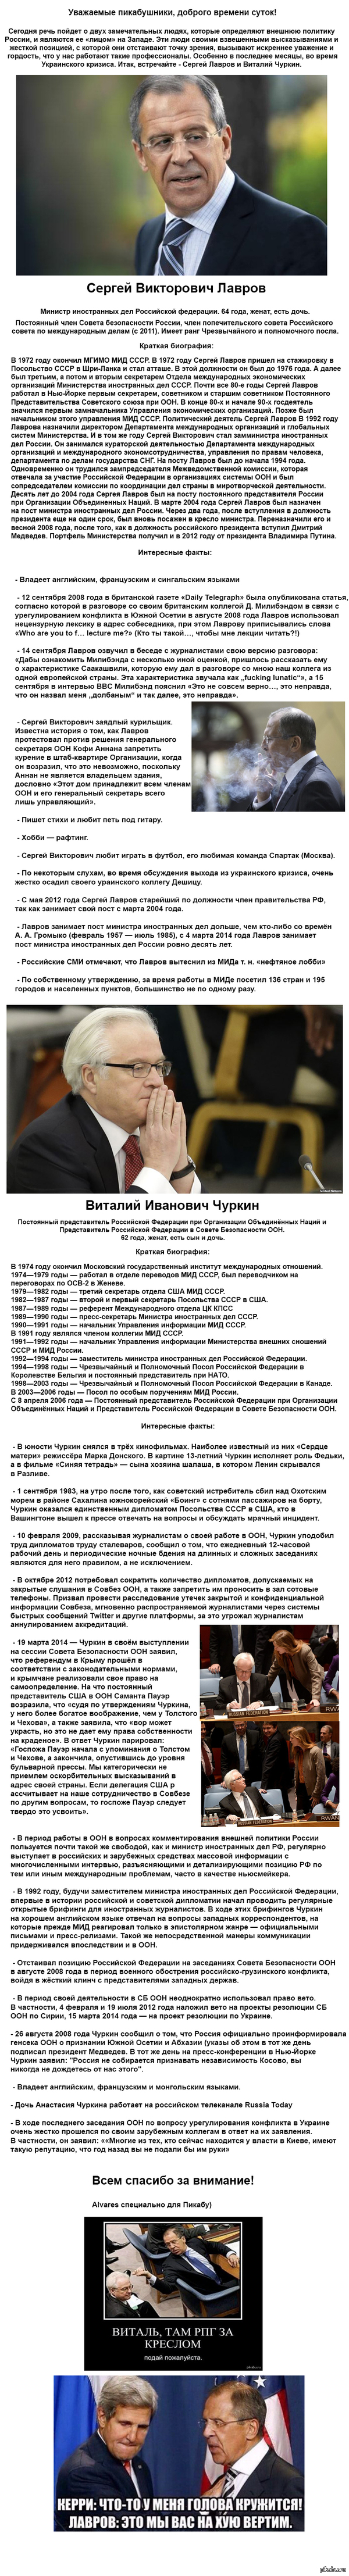 Sergey Lavrov and Vitaly Churkin - Vitaly Churkin, Sergey Lavrov, UN, Meade, Longpost